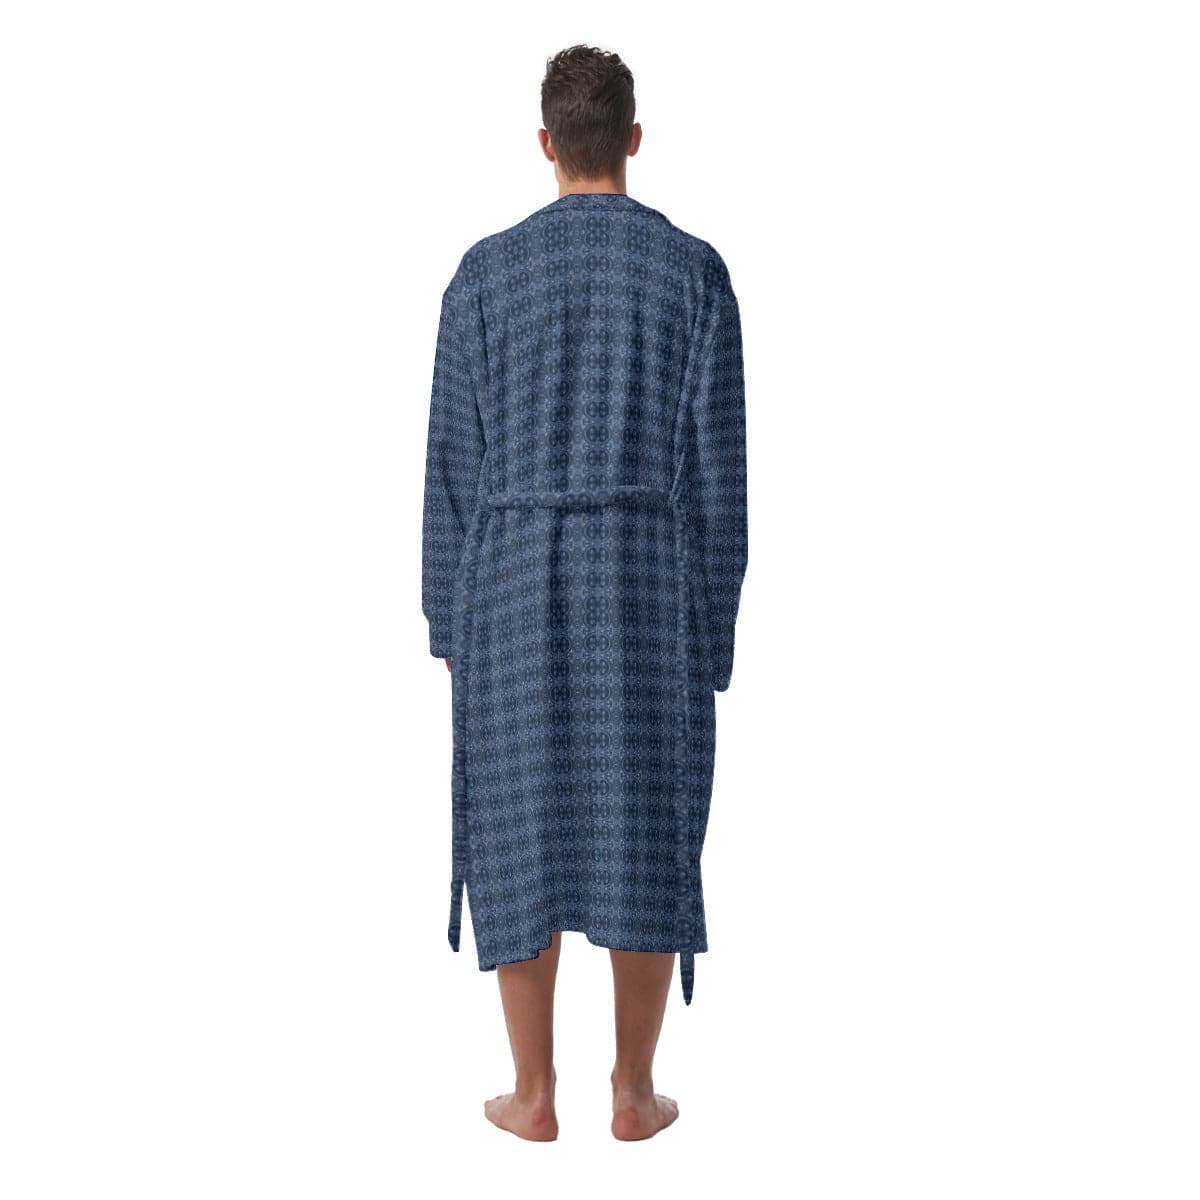 Jupiter Blue Patterned Stylish  Men's Heavy Fleece (Bath) Robe, by Sensus Studio Design